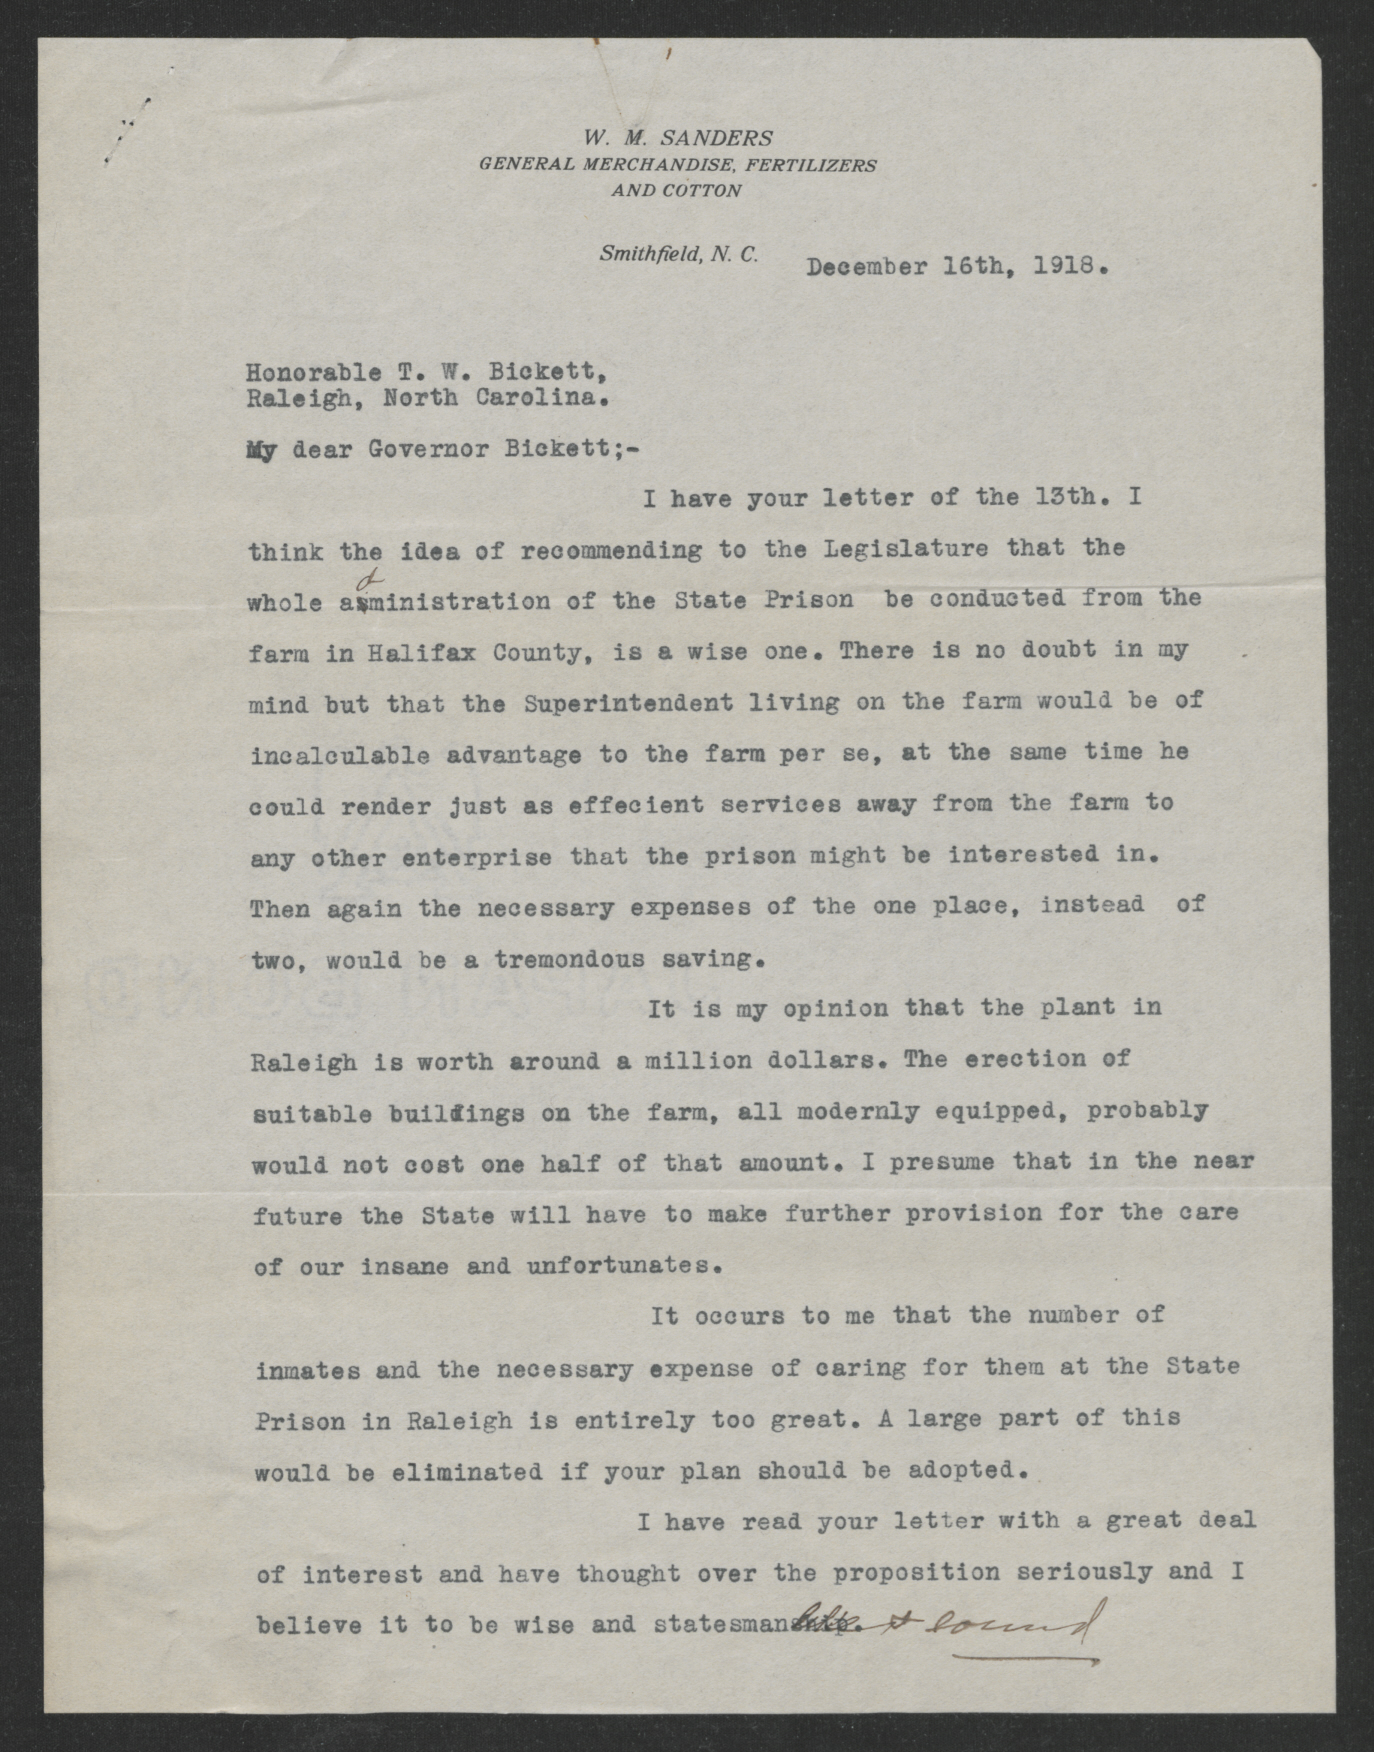 Sanders to Bickett, December 16, 1918, page 1